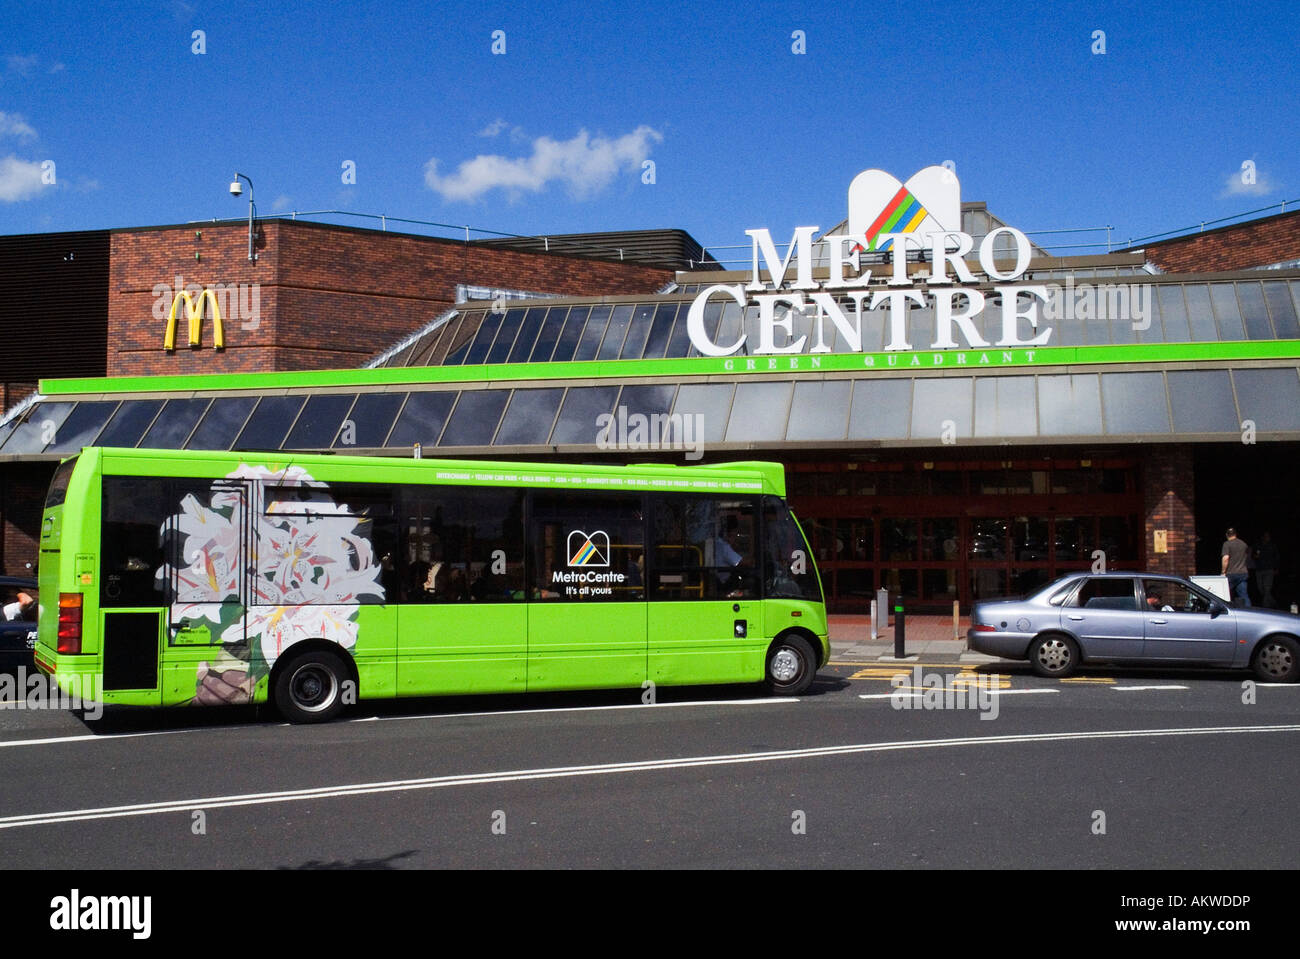 dh Metro centre shuttle bus NEWCASTLE NORTHUMBRIA British mall transport shopping exterior Stock Photo